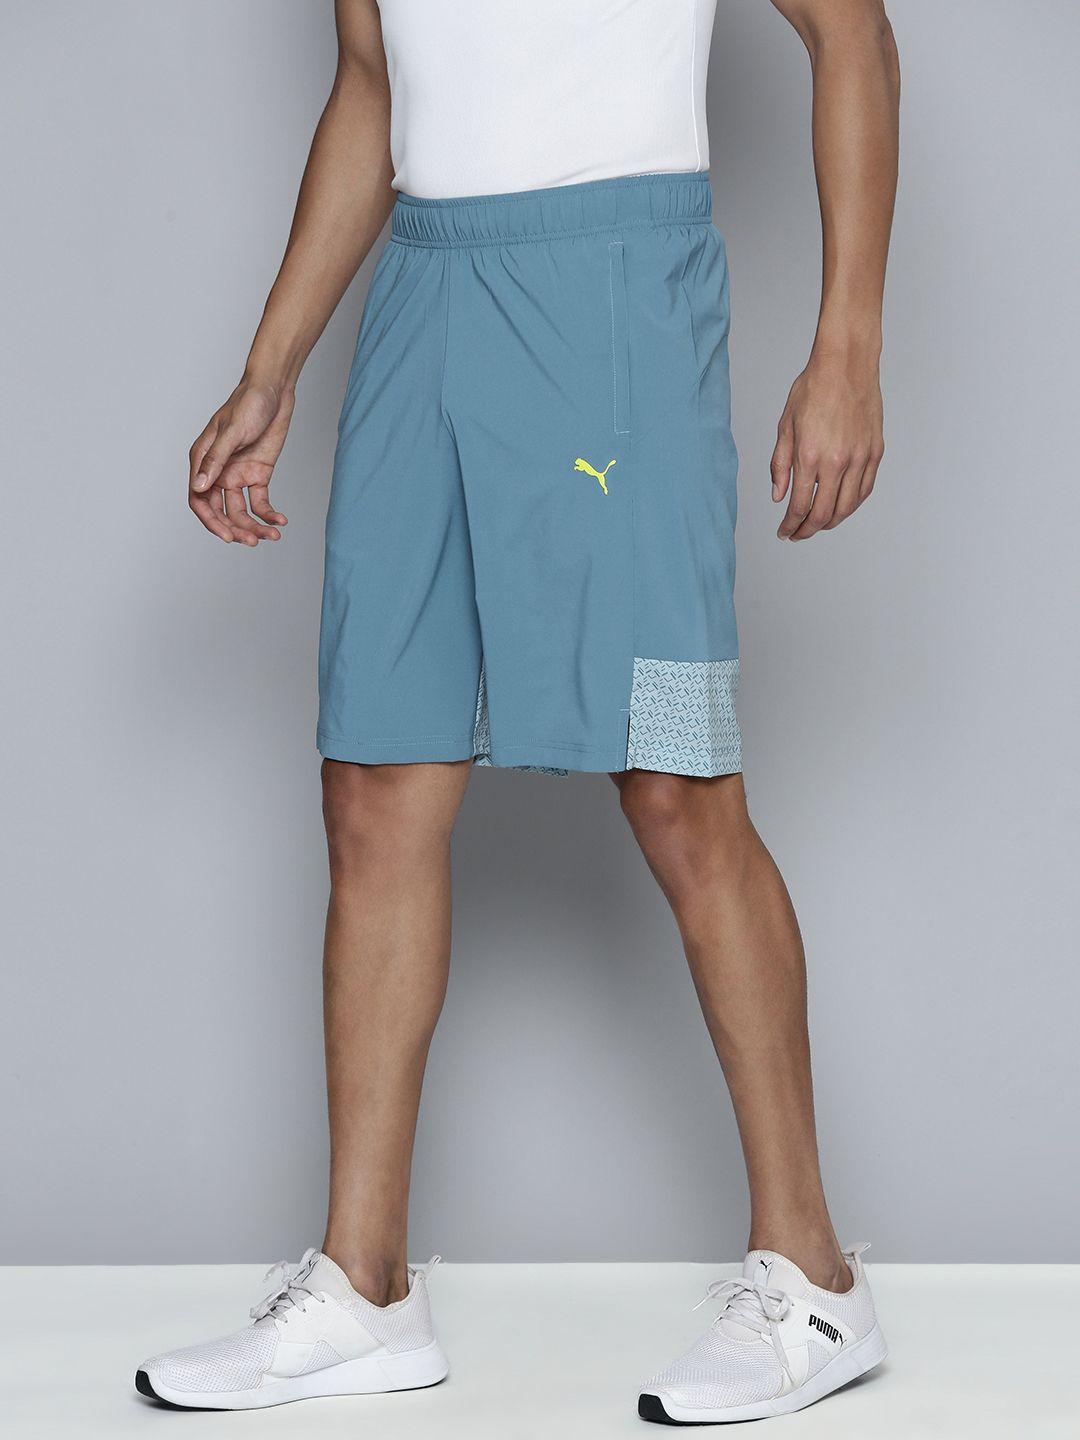 one8-x-puma-virat-kohli-woven-drycell-training-men-sports-shorts